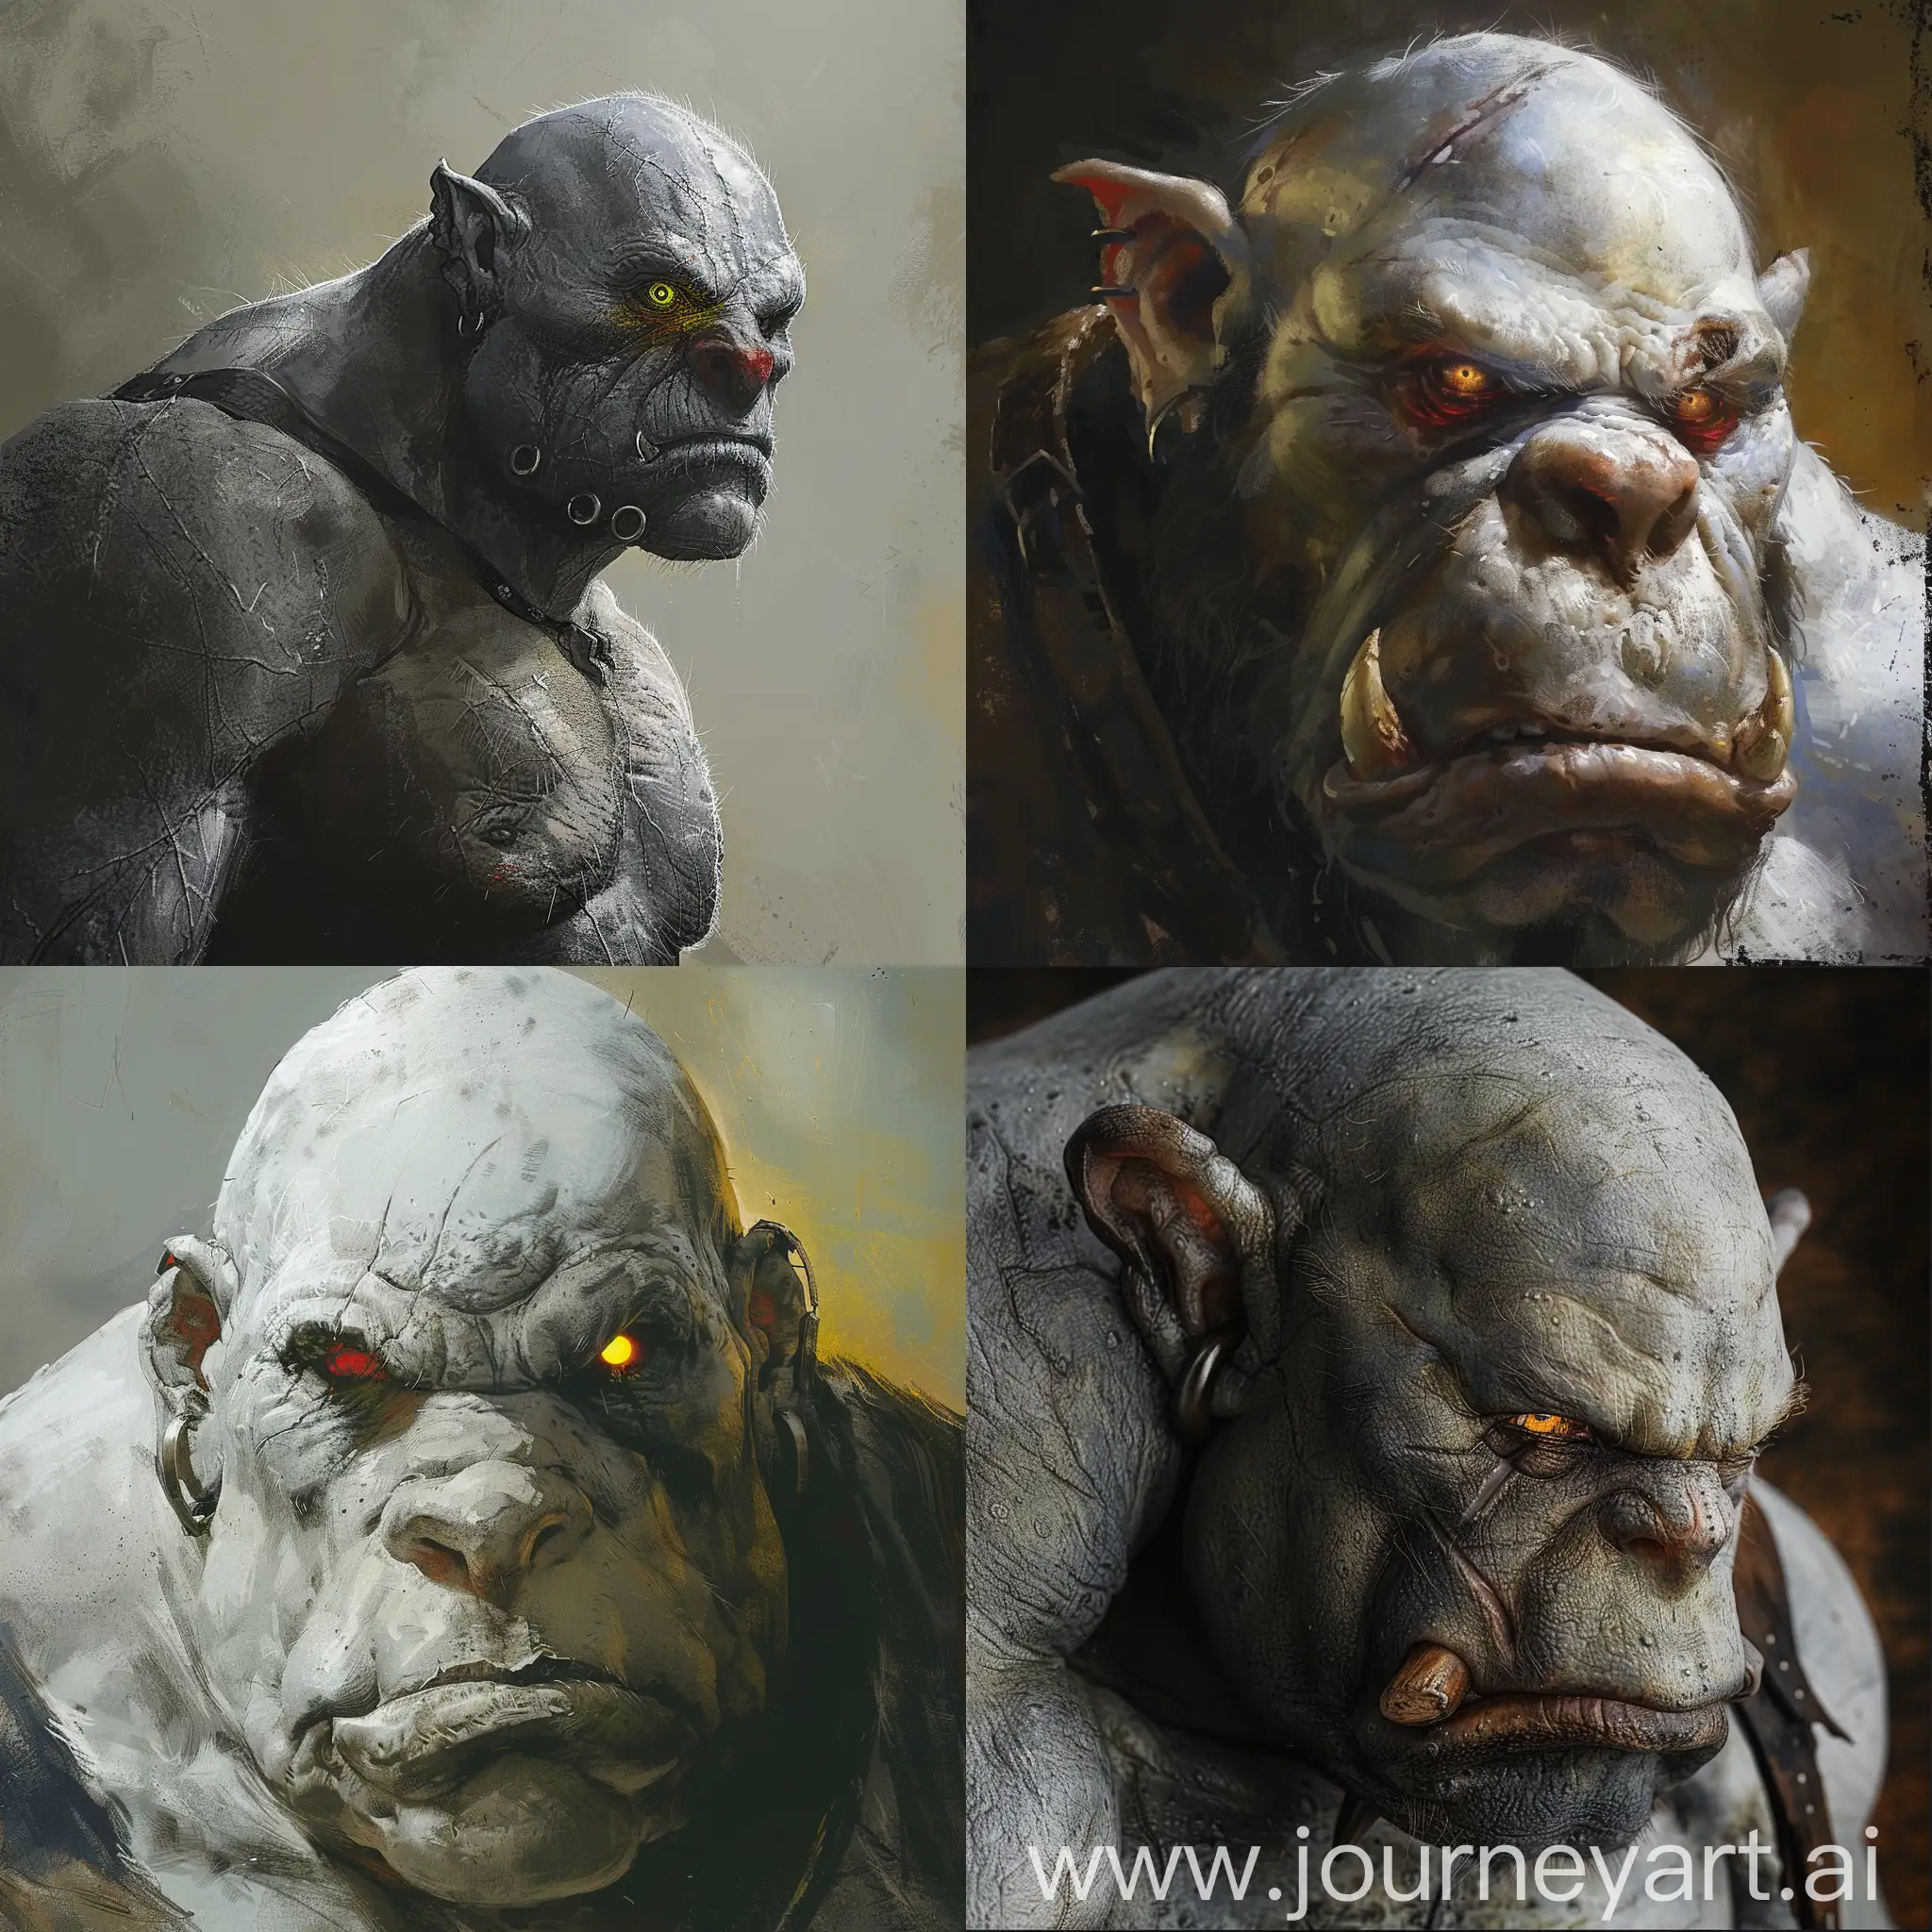 big, ogre with one red eye, one yellow eye, white-grey skin, no hair